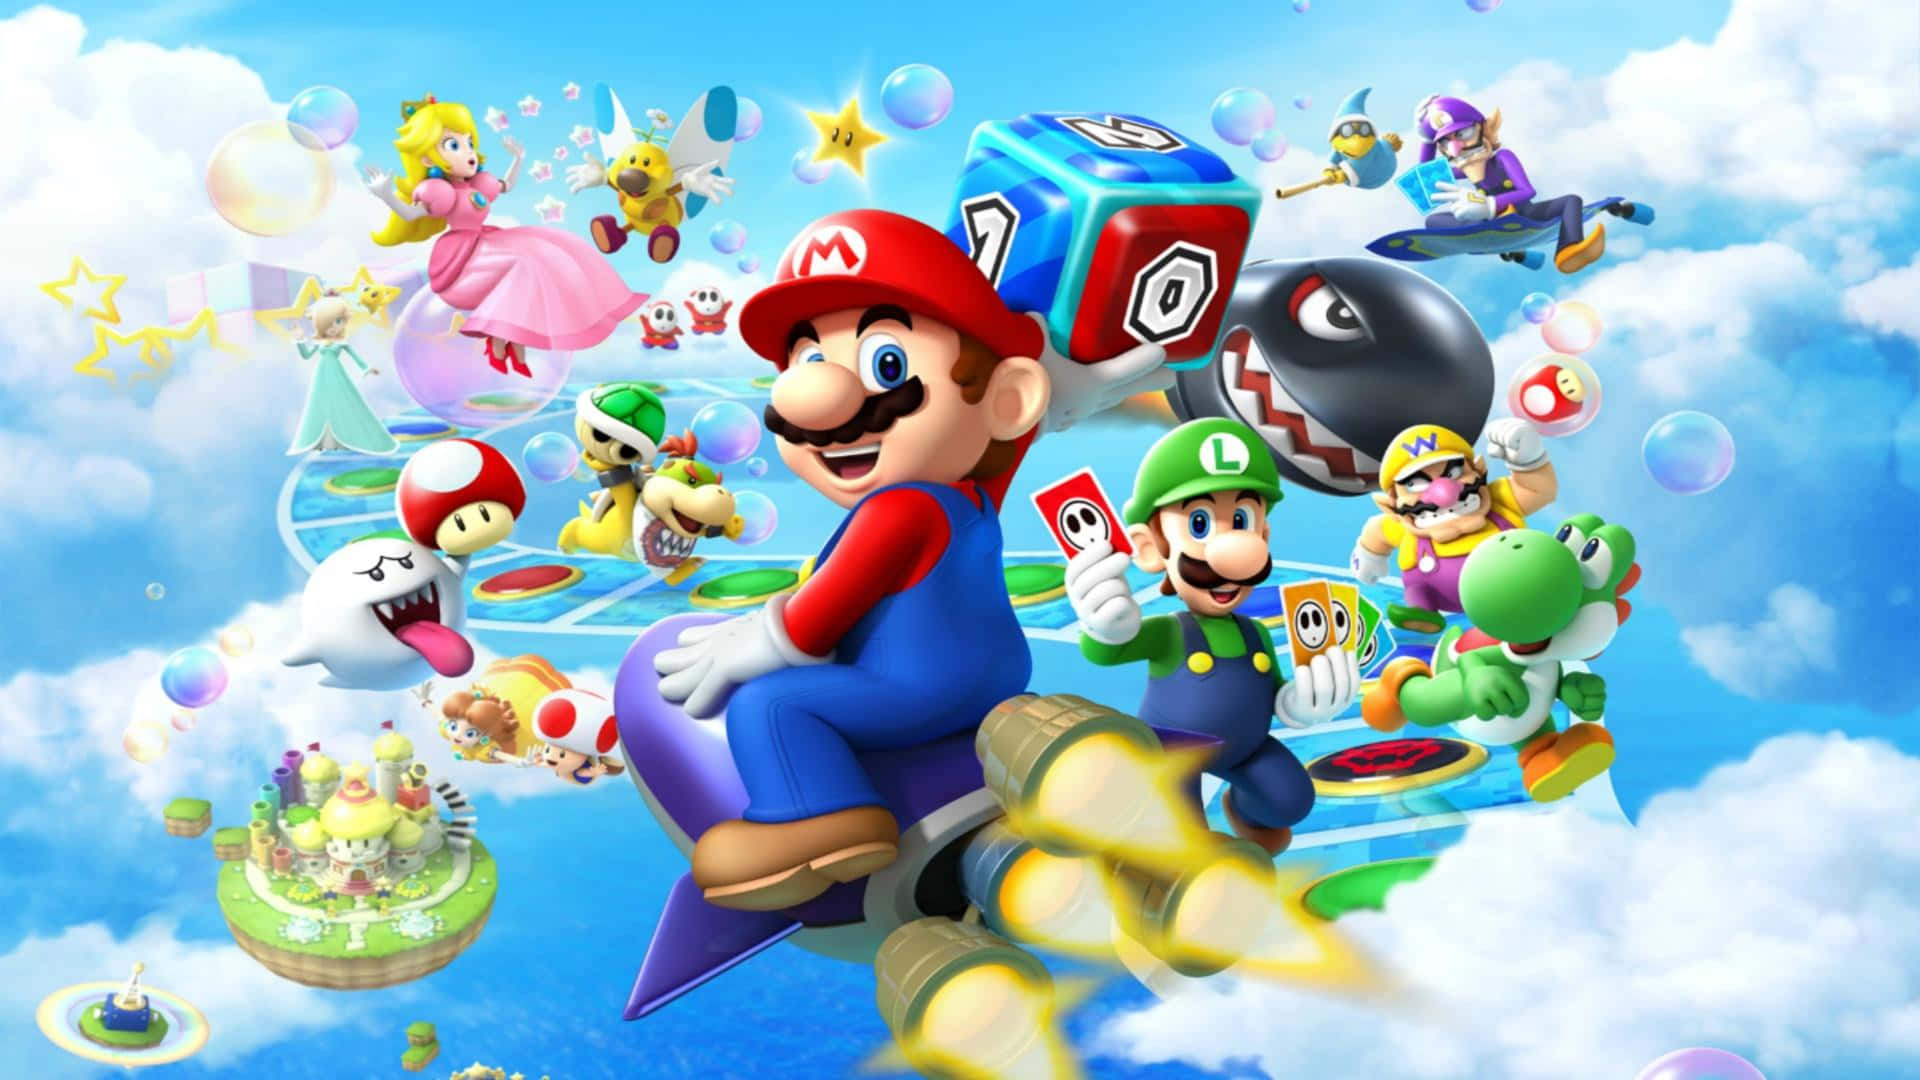 Luigi and Mario team up to save the Mushroom Kingdom